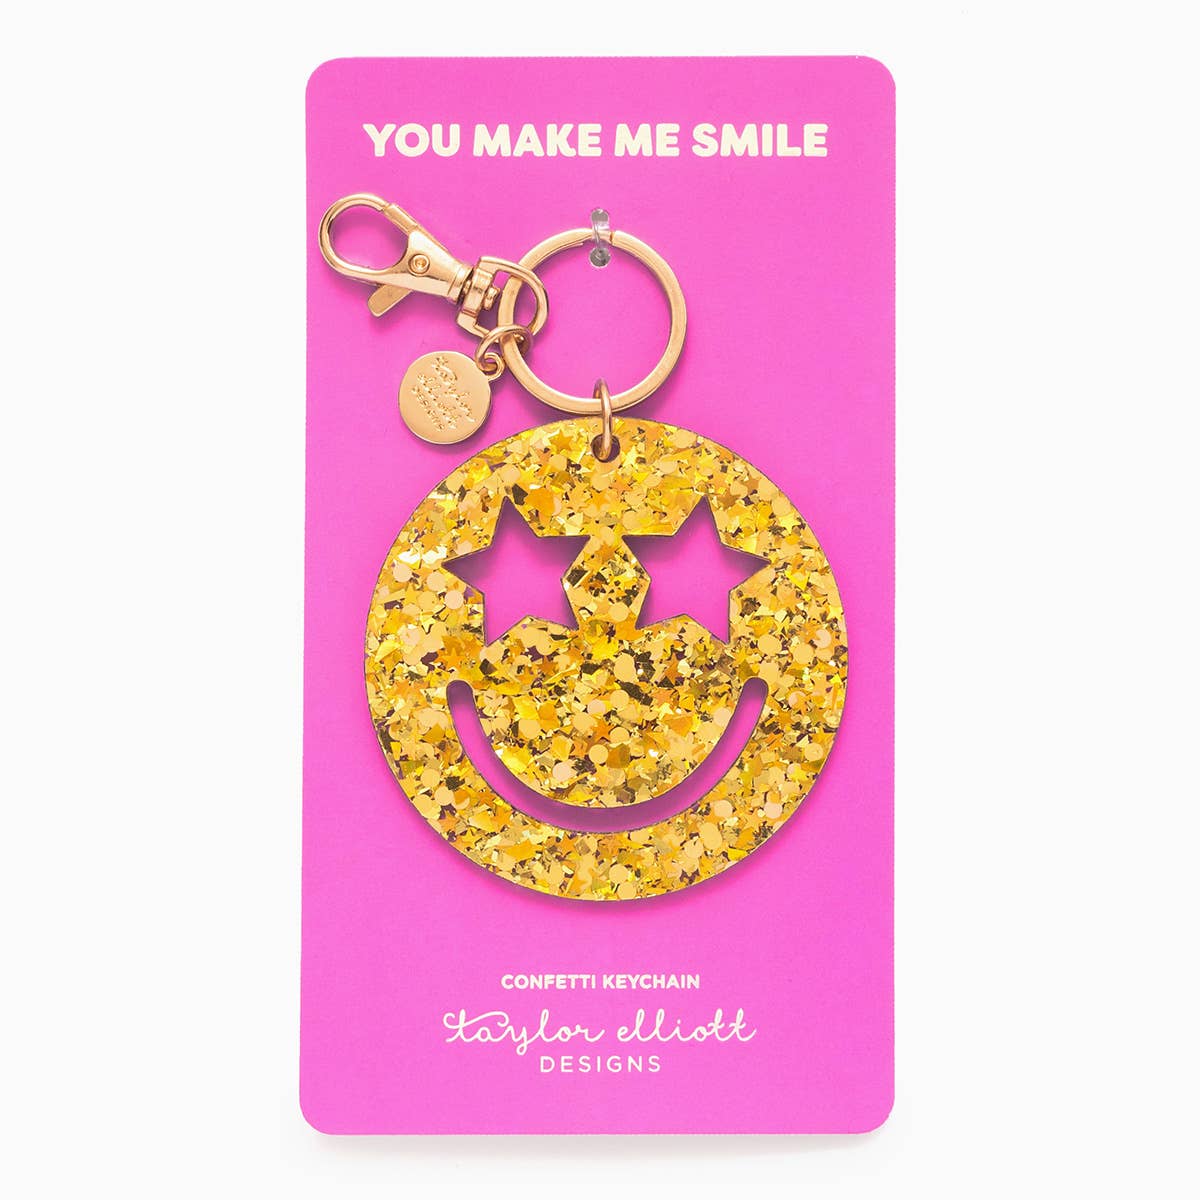 Confetti Keychain - Smiley Stars